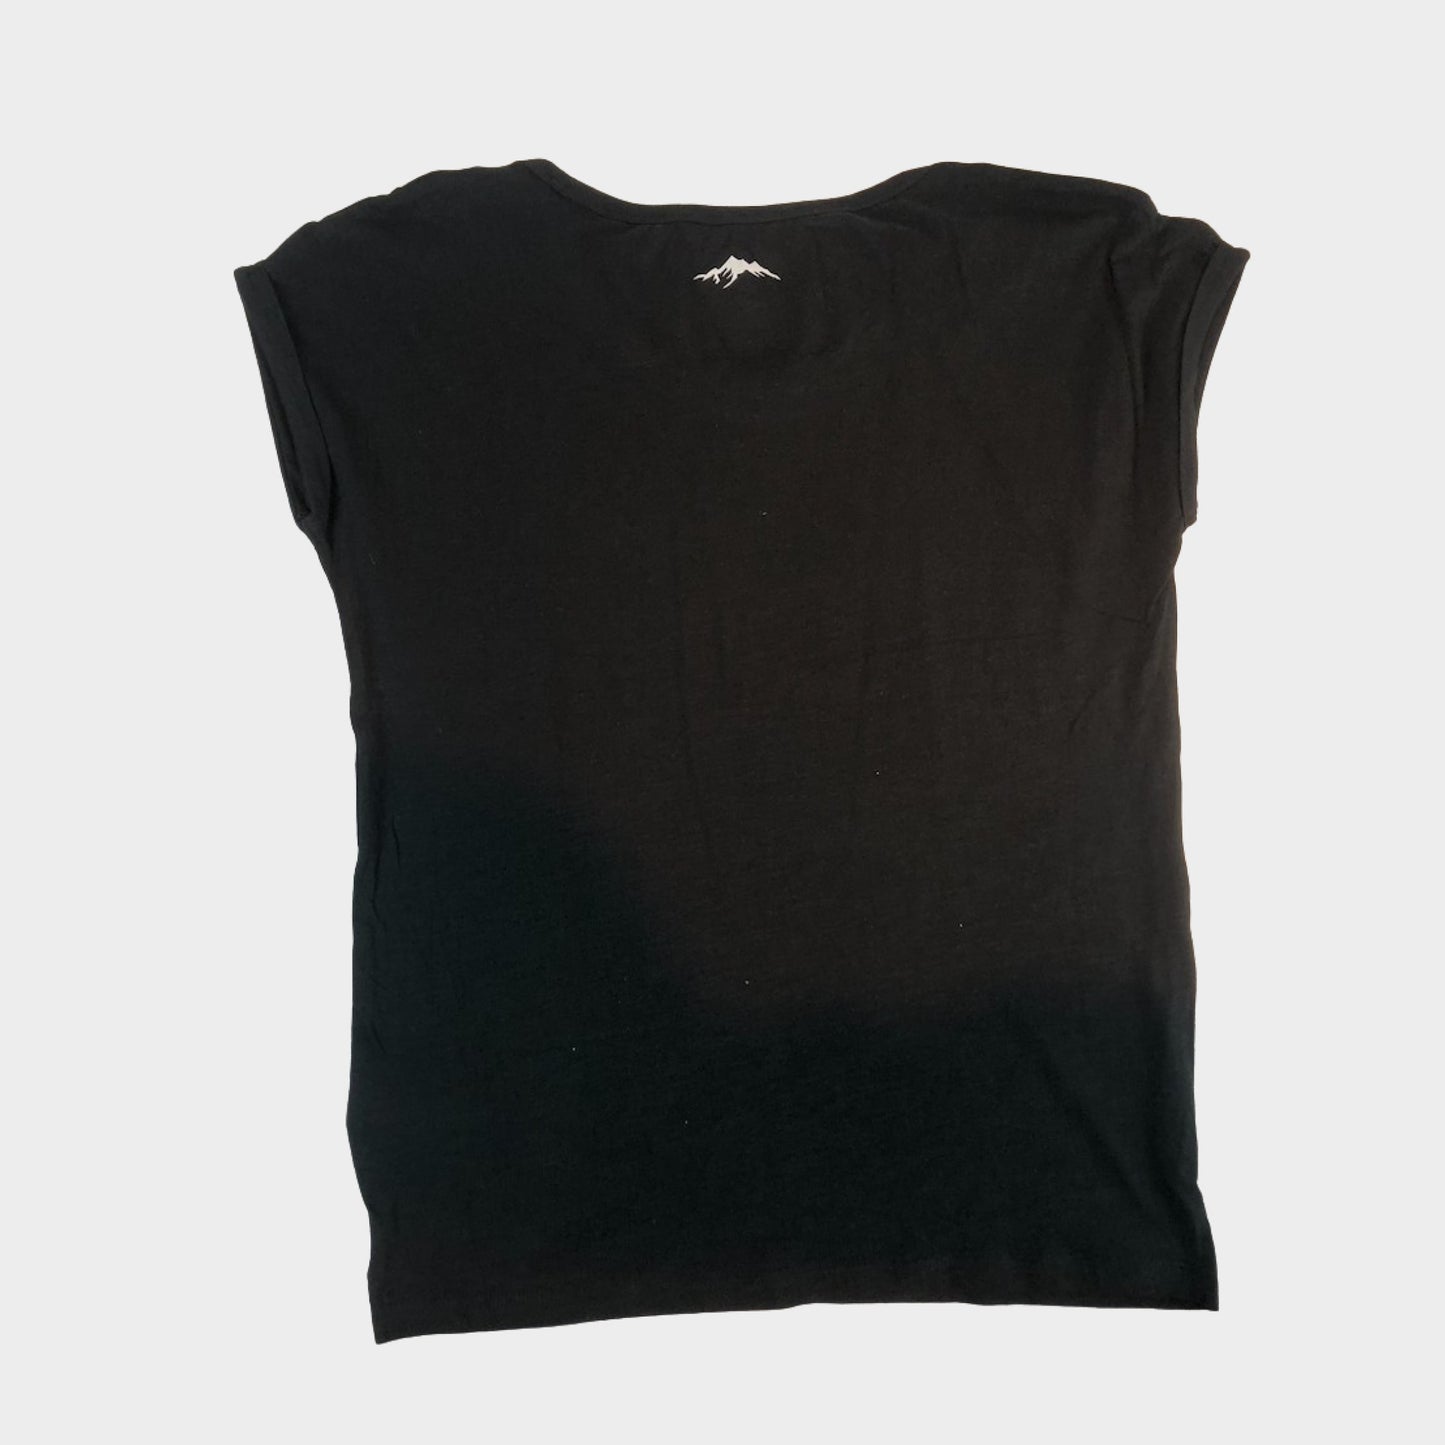 Draussen daheim - Oversize Freizeit Shirt Damen schwarz